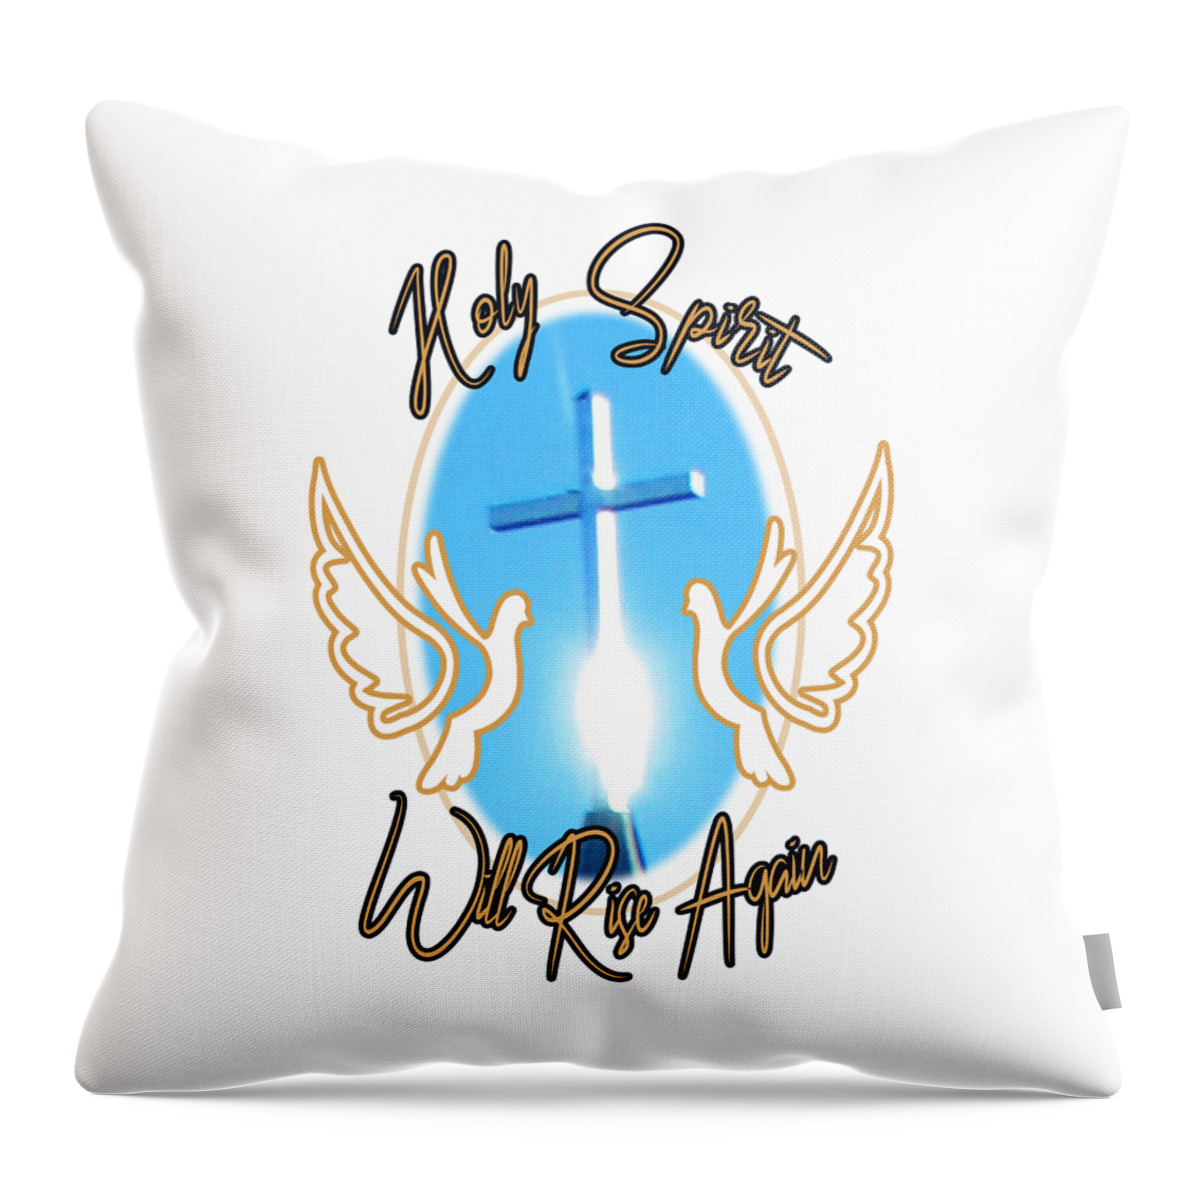 Holy Spirit Throw Pillow featuring the digital art Holy Spirit on a Cross by Delynn Addams